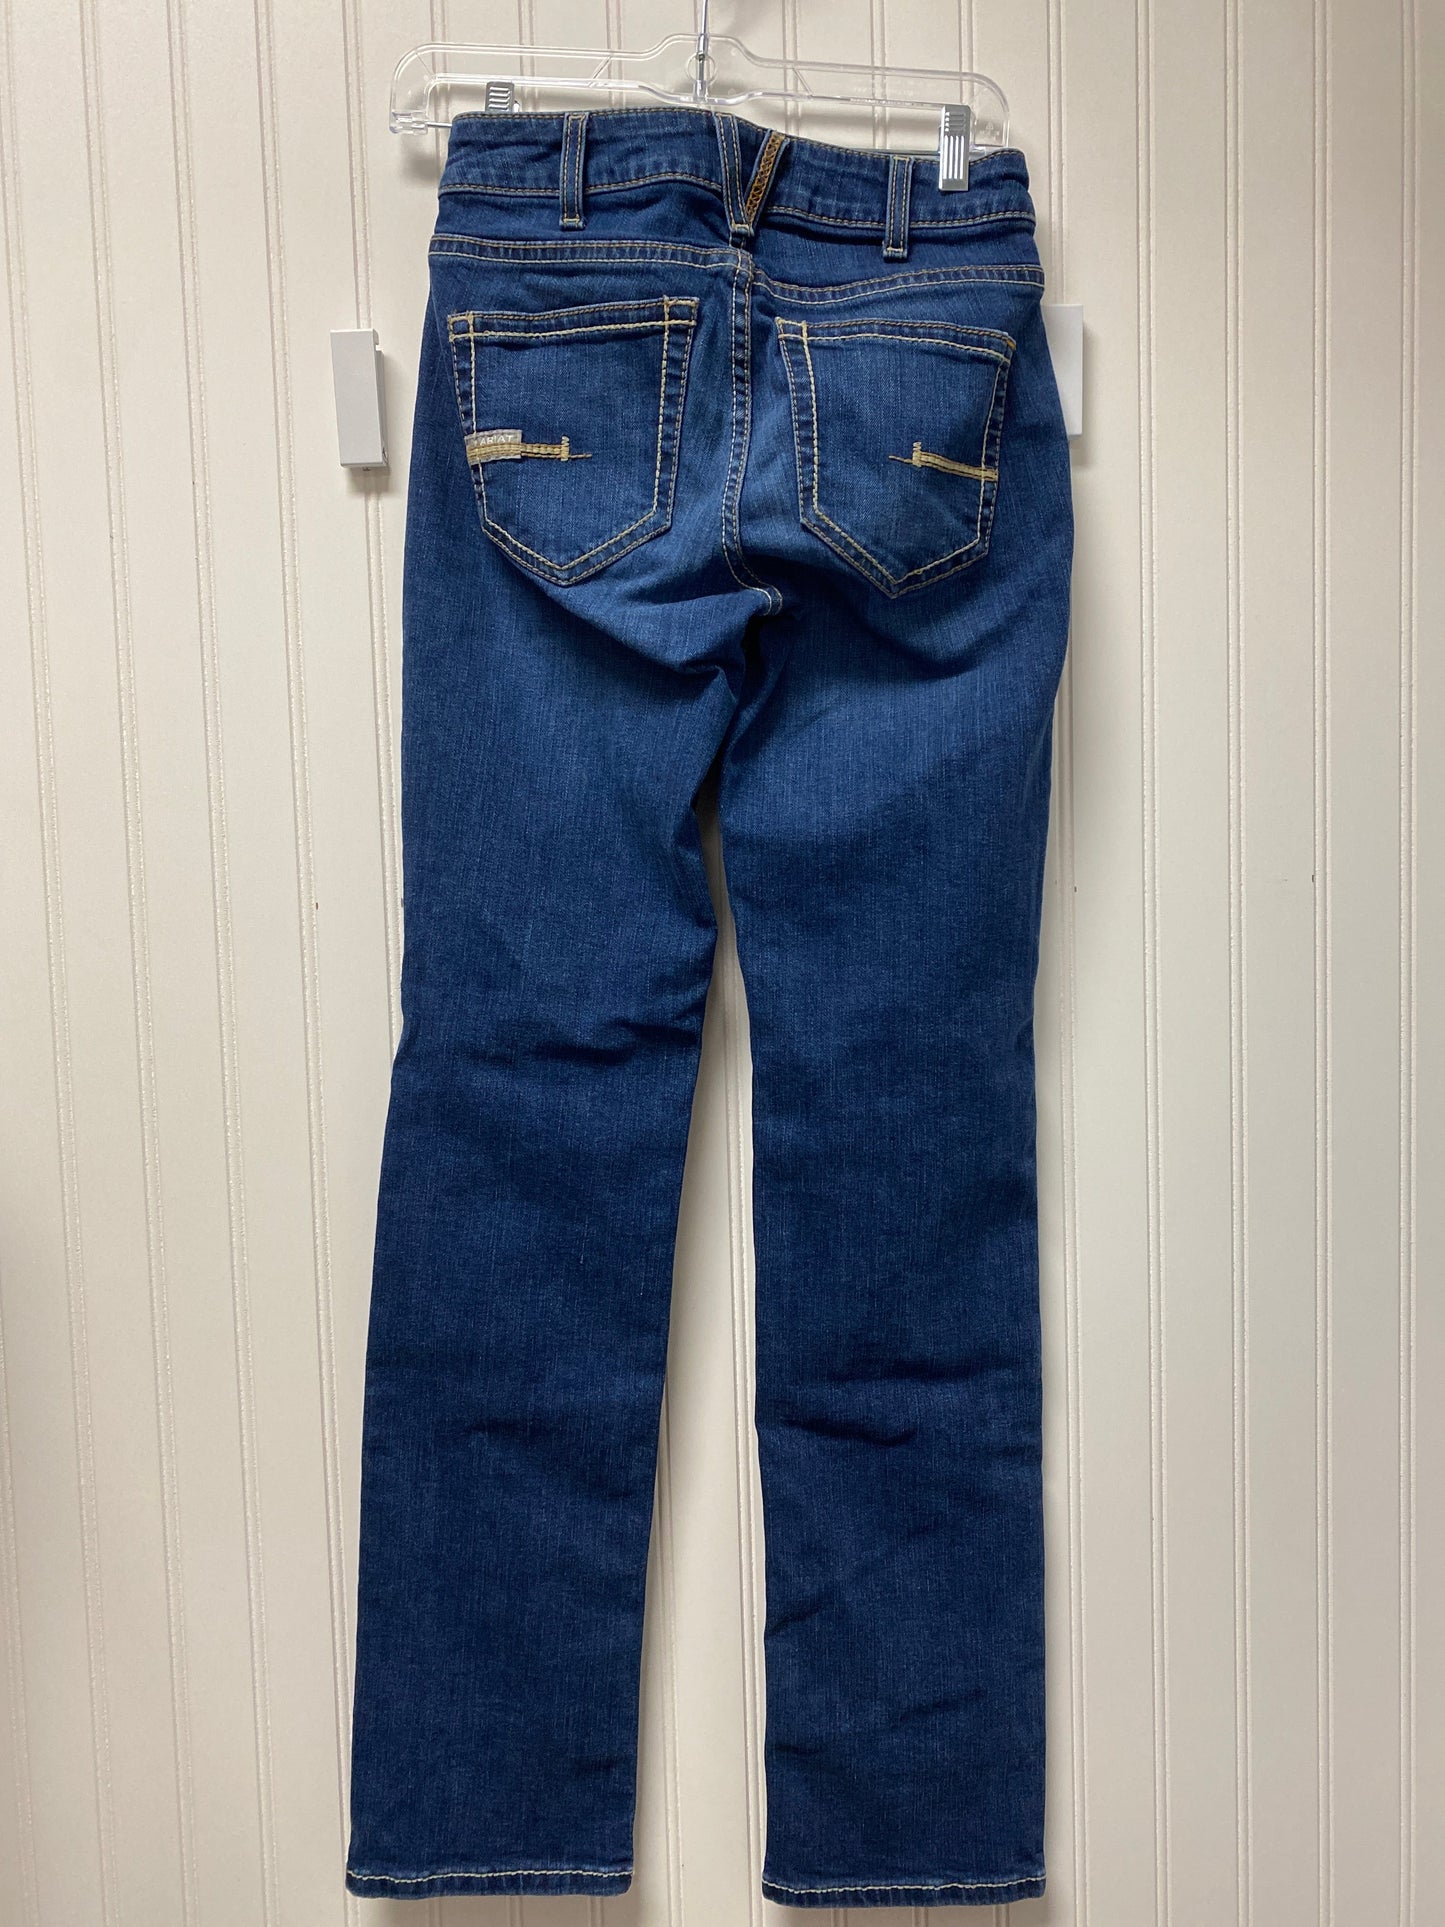 Blue Denim Jeans Designer Ariat, Size 2